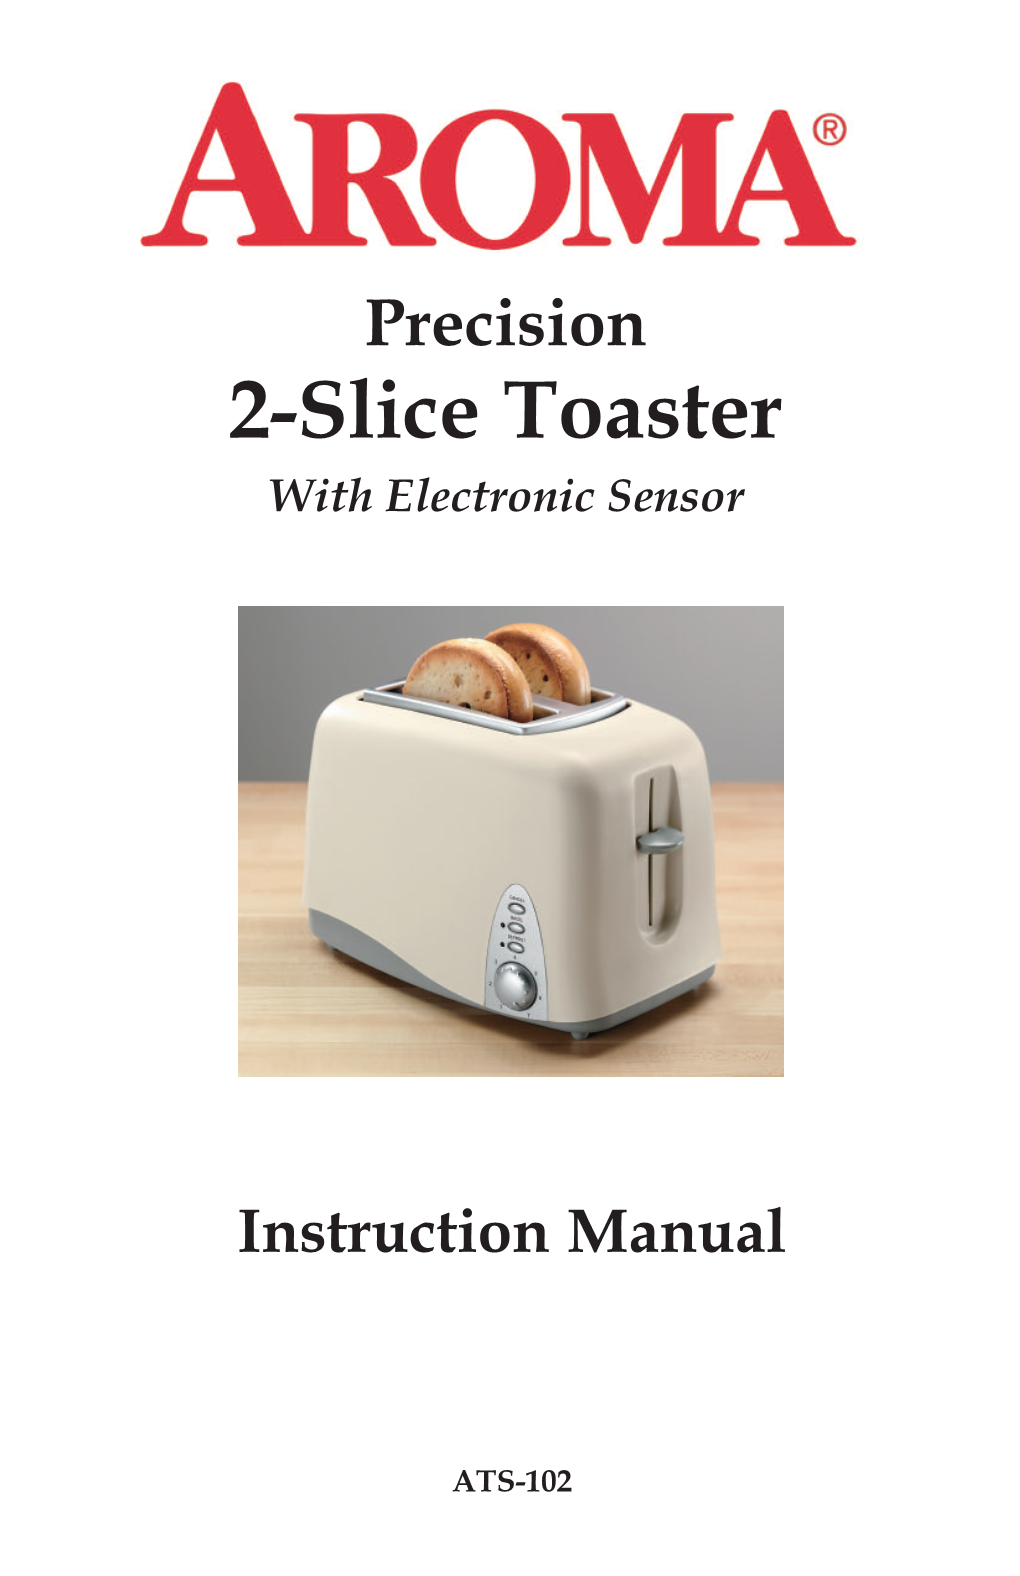 2-Slice Toaster with Electronic Sensor